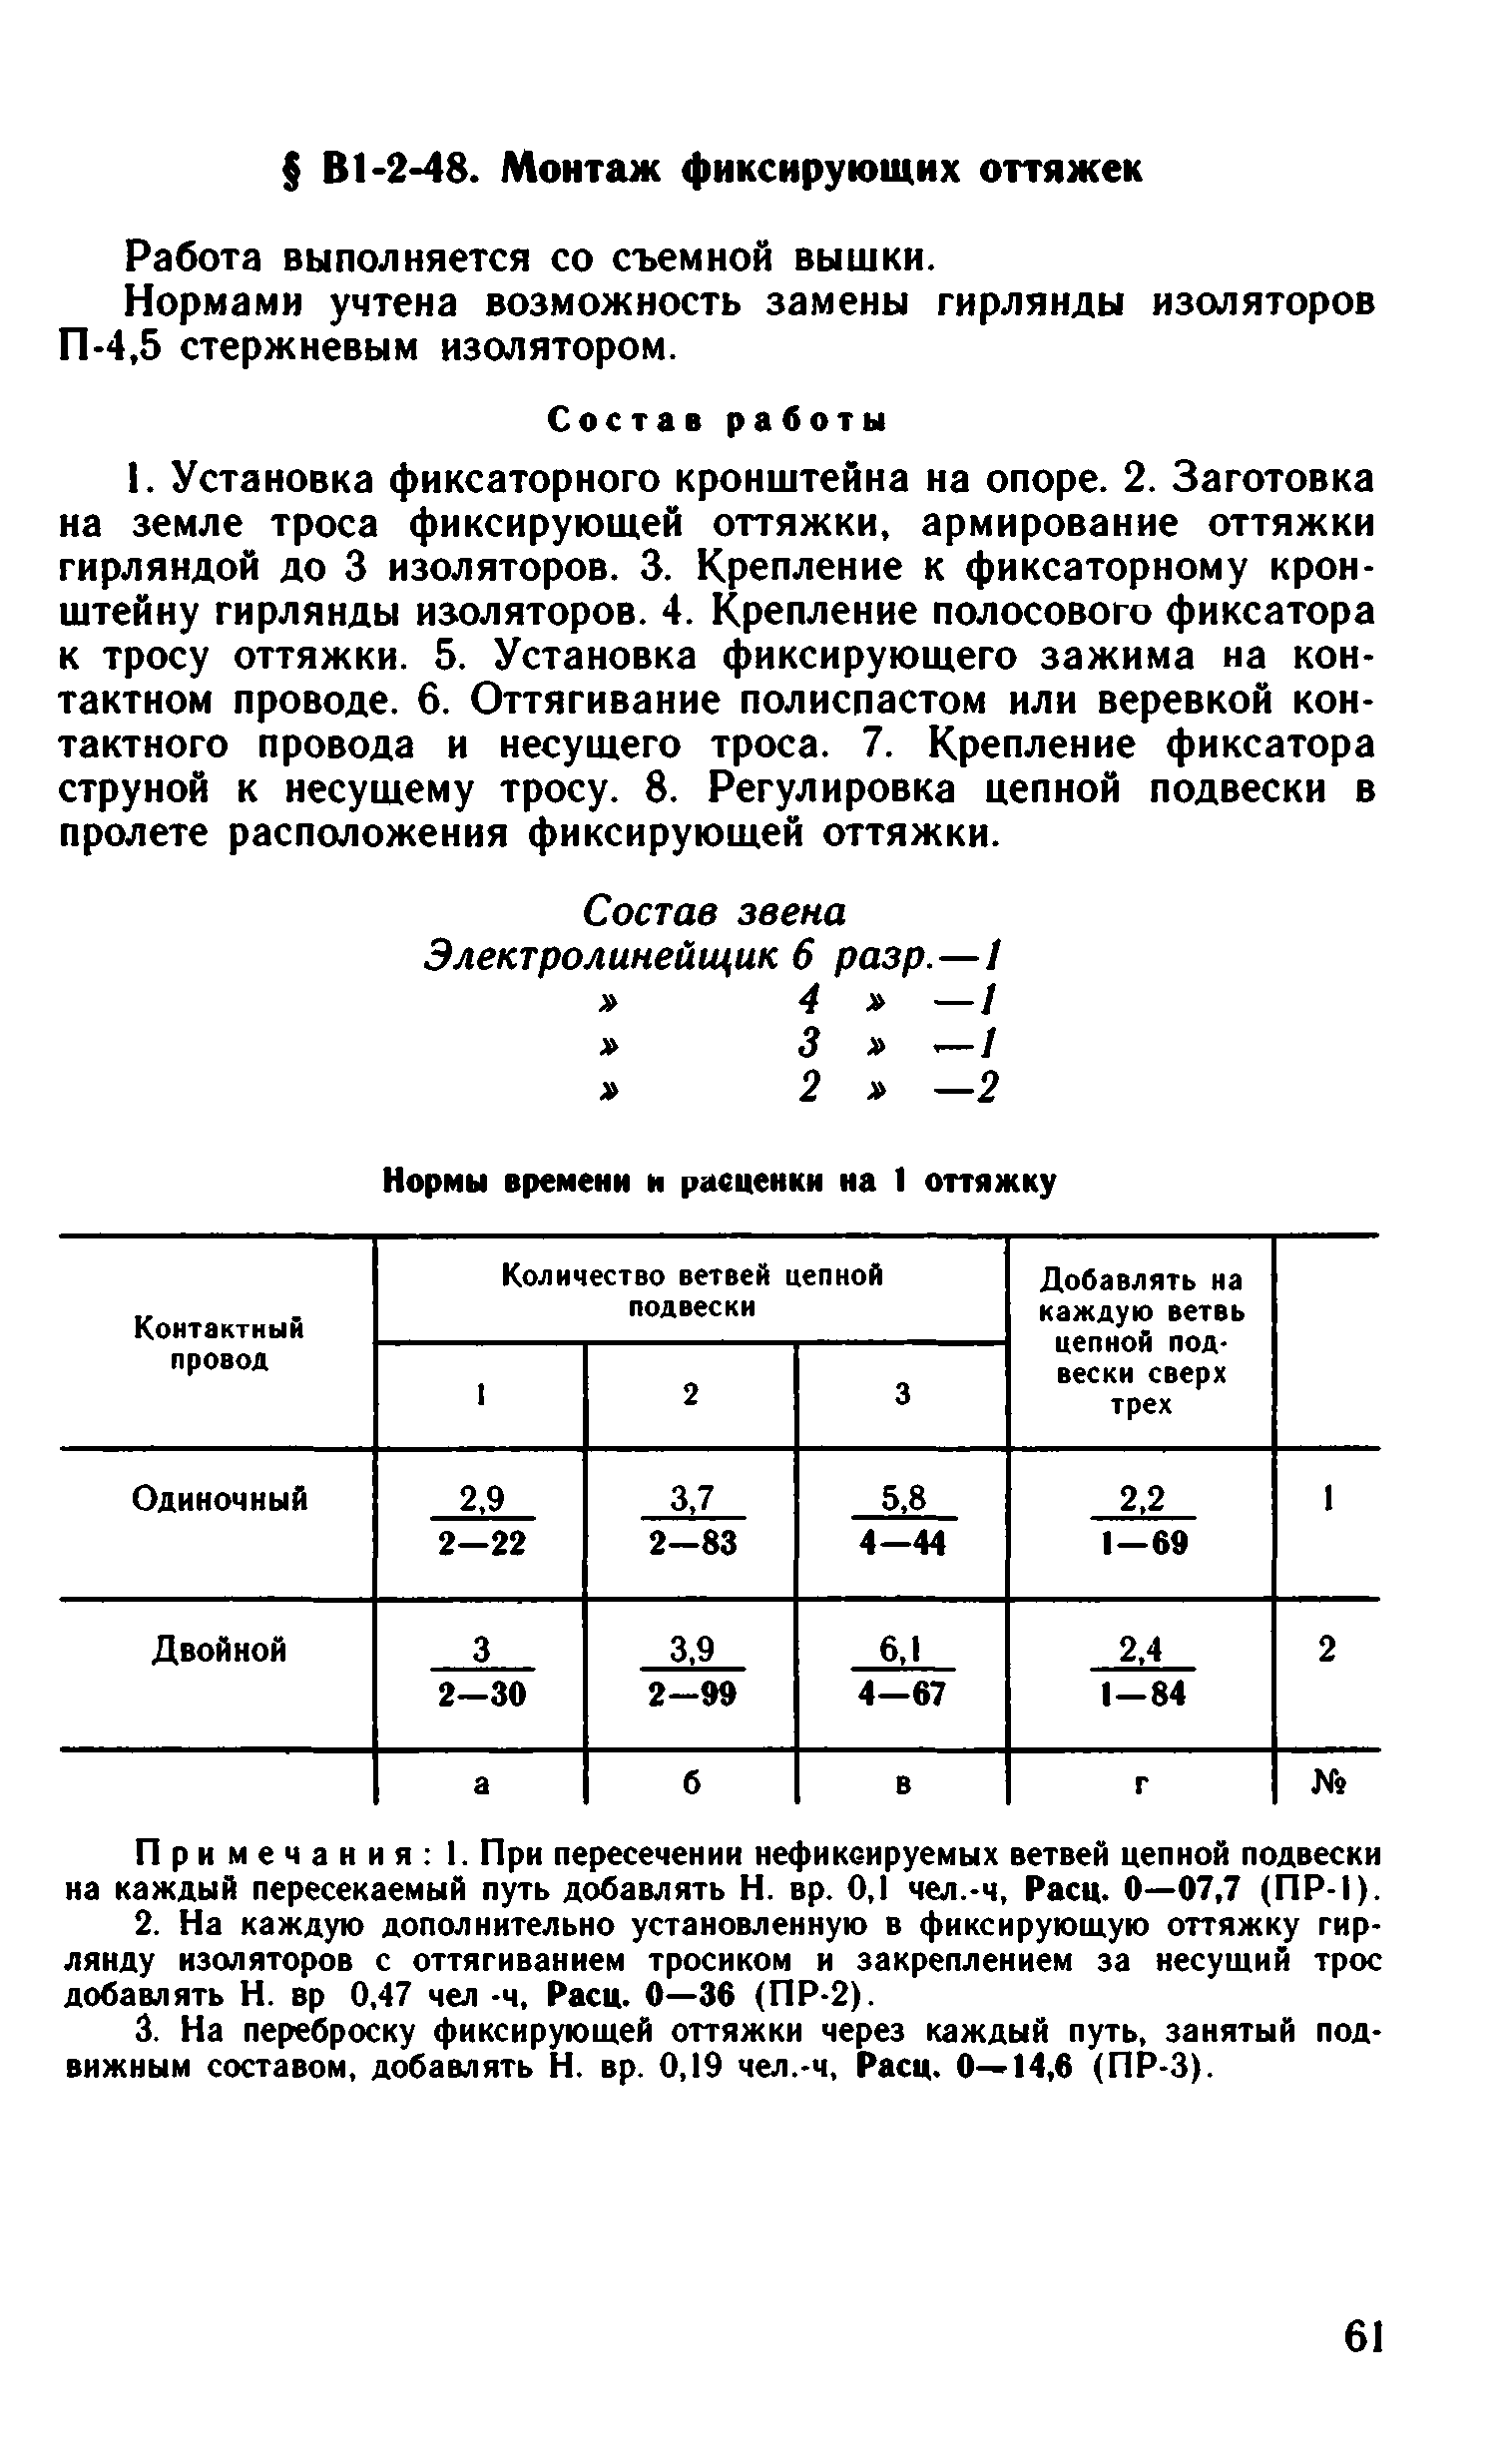 ВНиР В1-2